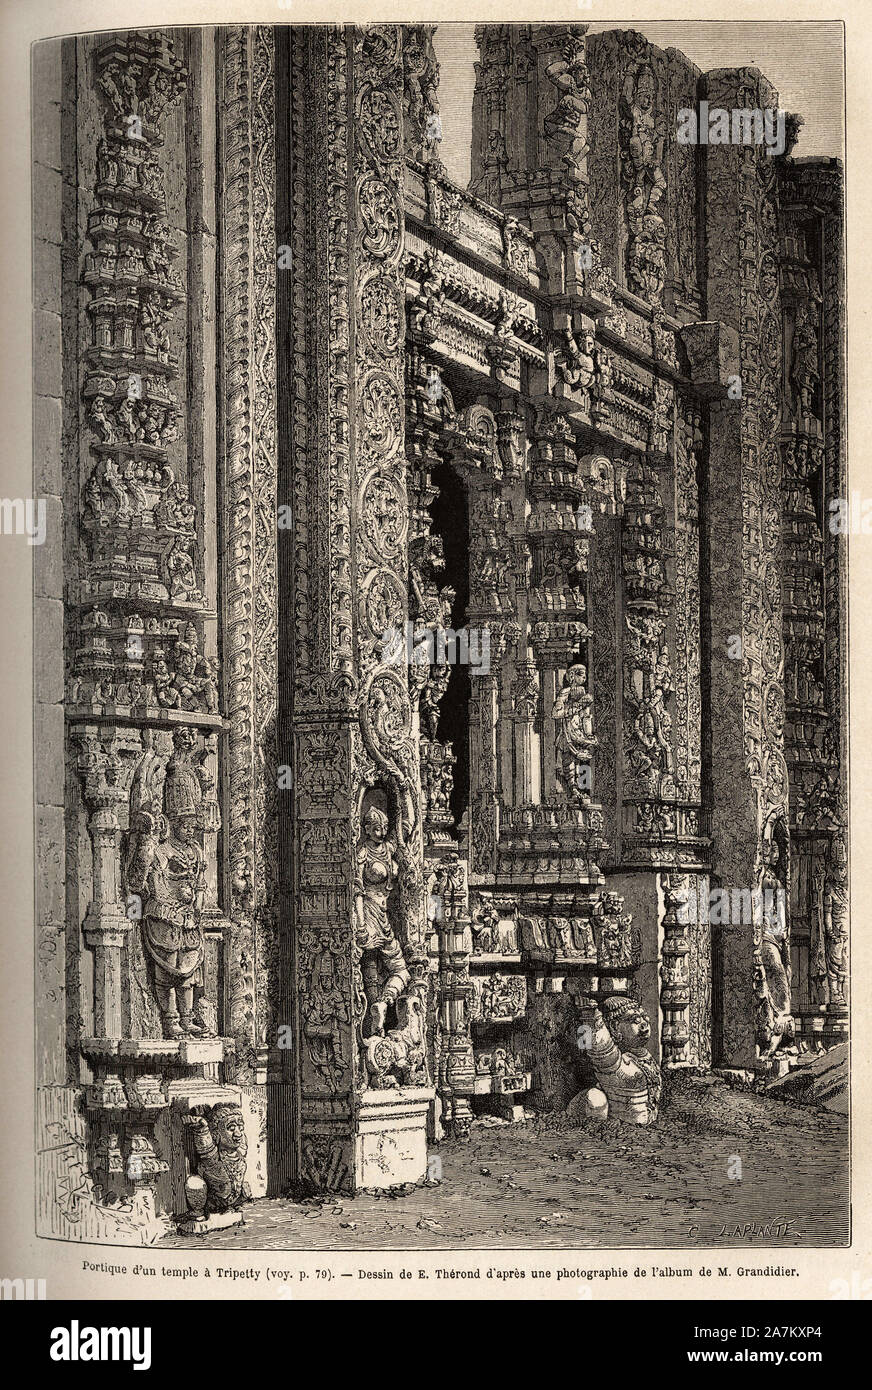 Le Corporate sculpte d'un-Tempel ein Tripetty (ou Tirupati, dans l'Andhra Pradesh), Un Lieu de pelerinage hindou wichtig. Tiefdruck illustrer pour le vo Stockfoto